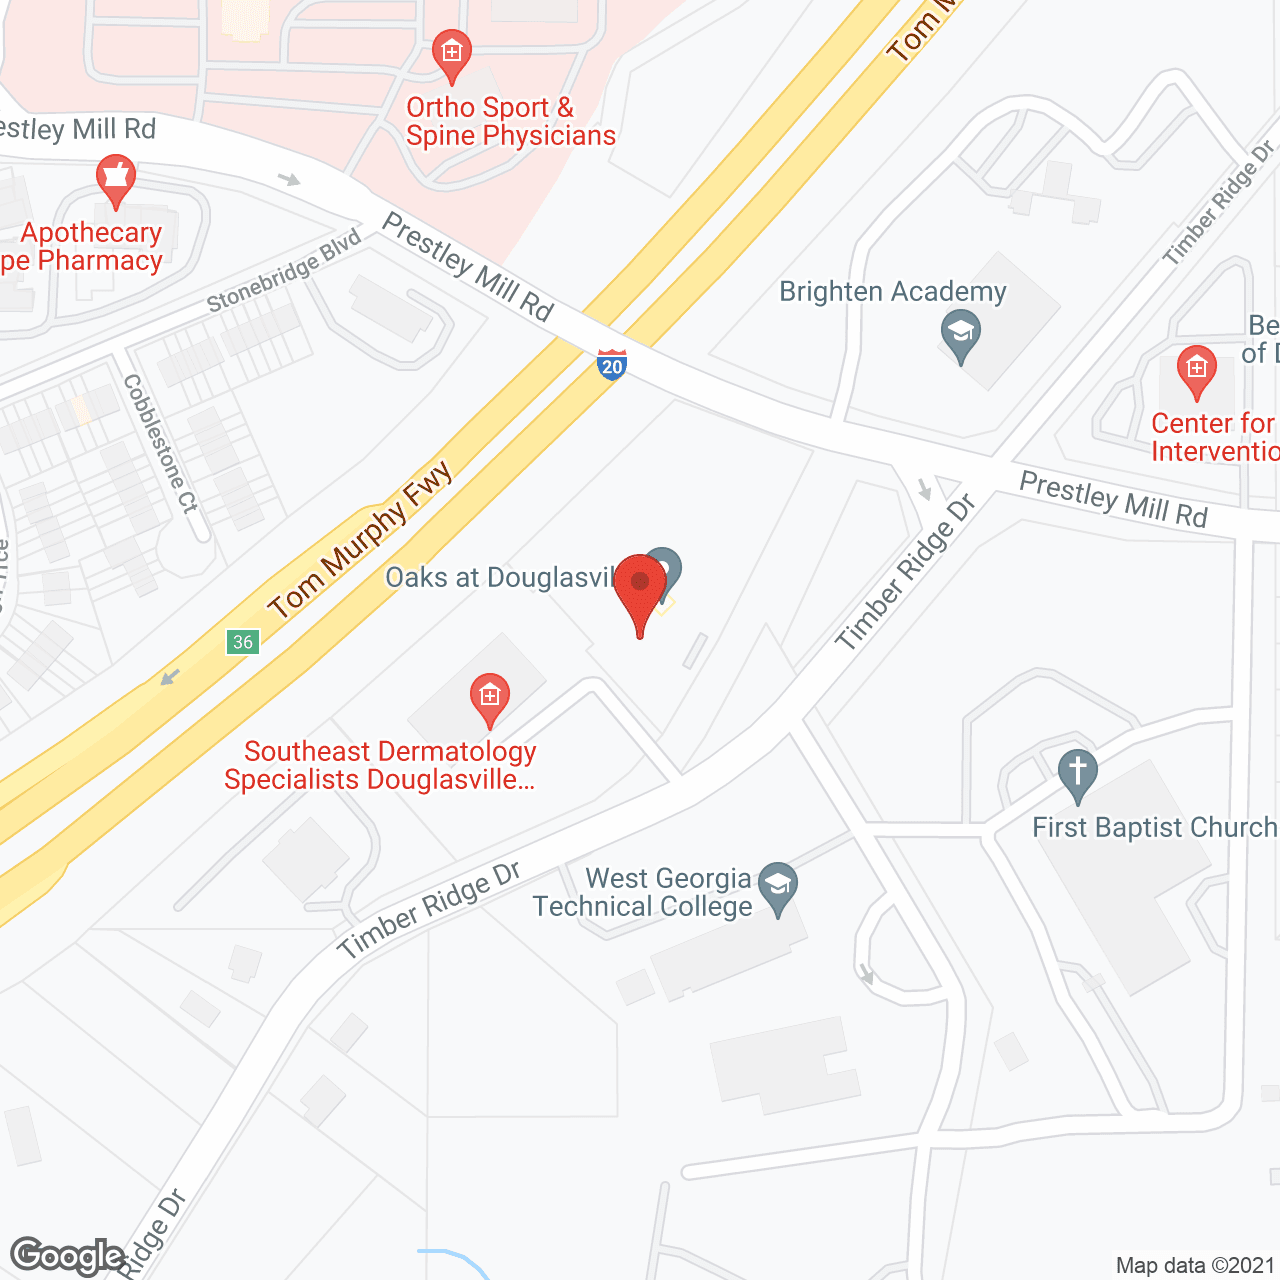 Oaks at Douglasville in google map